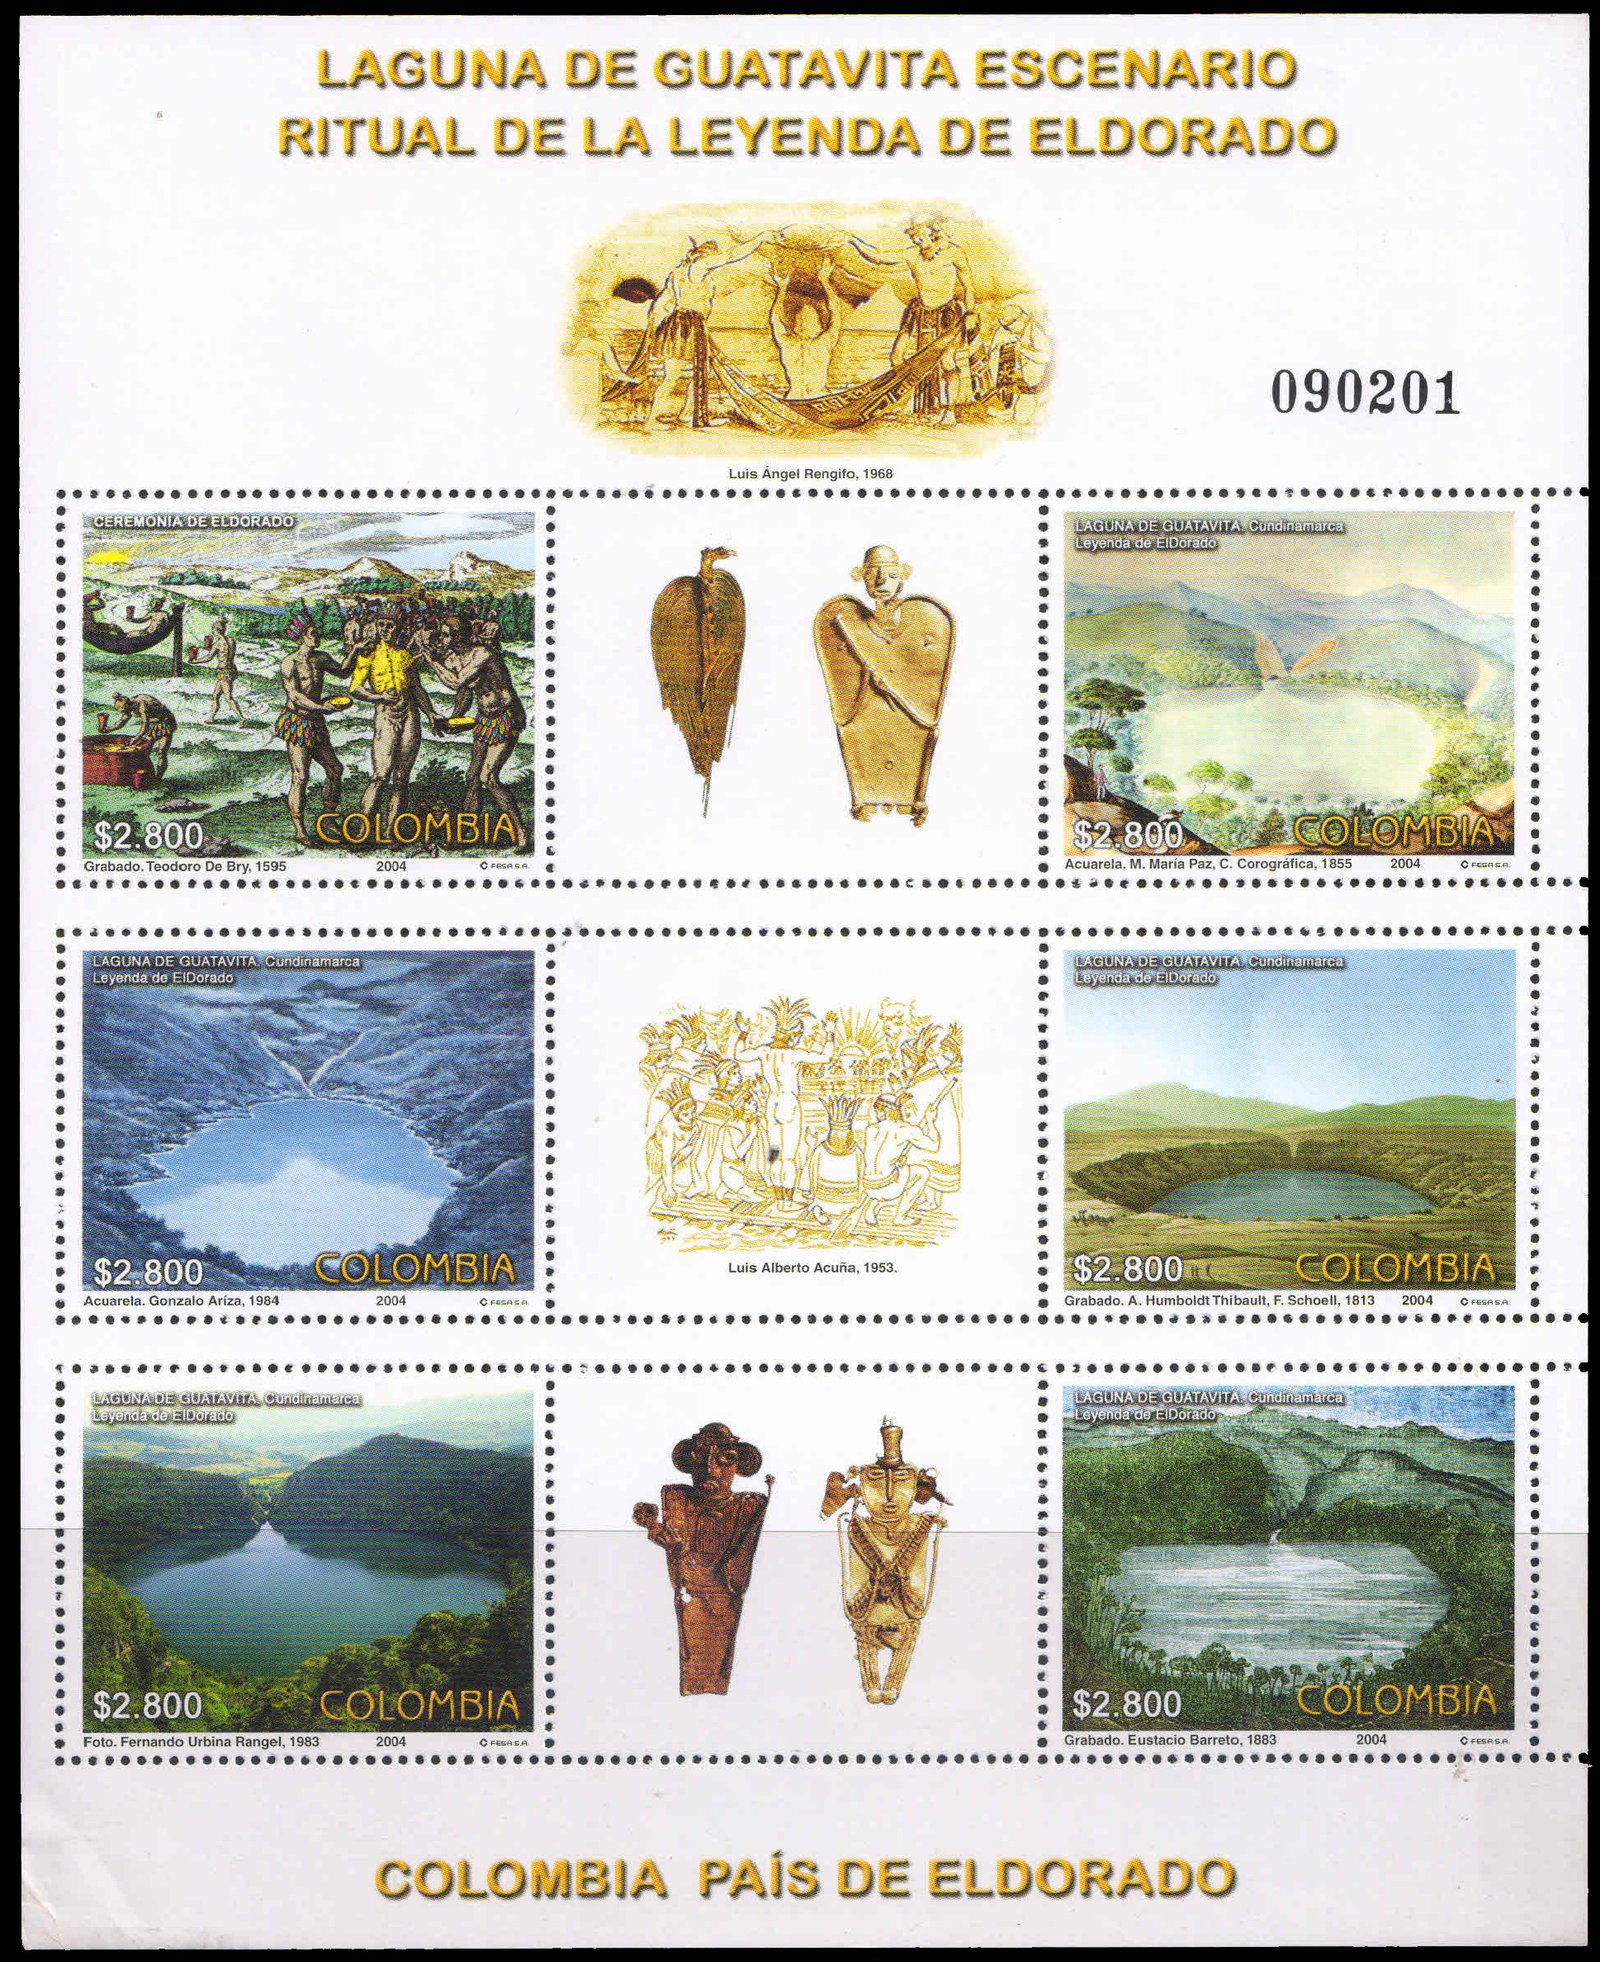 COLOMBIA 2004-Laguna de Guatevita-Site of Legend of EL Dorado, Cult of the Muisca Indians, Sheet of 6 stamps & Labels, S.G. 2338-2343-Cat � 32-